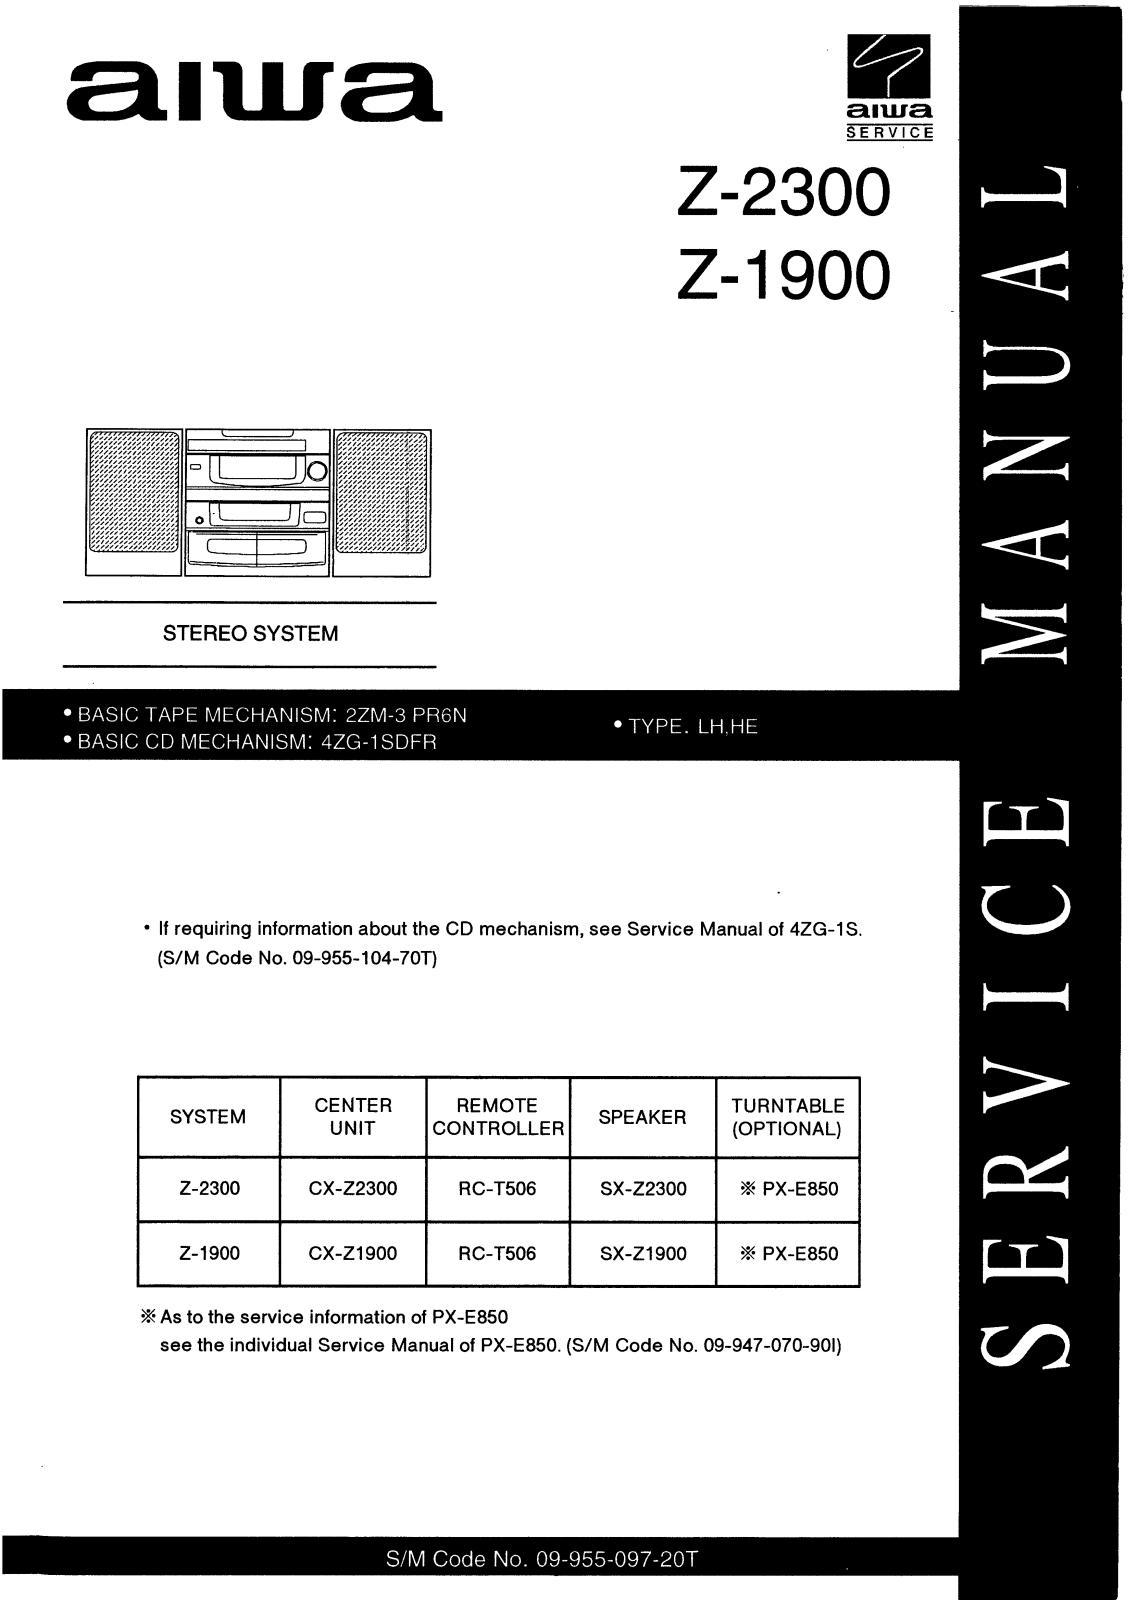 Aiwa Z2300 Service Manual